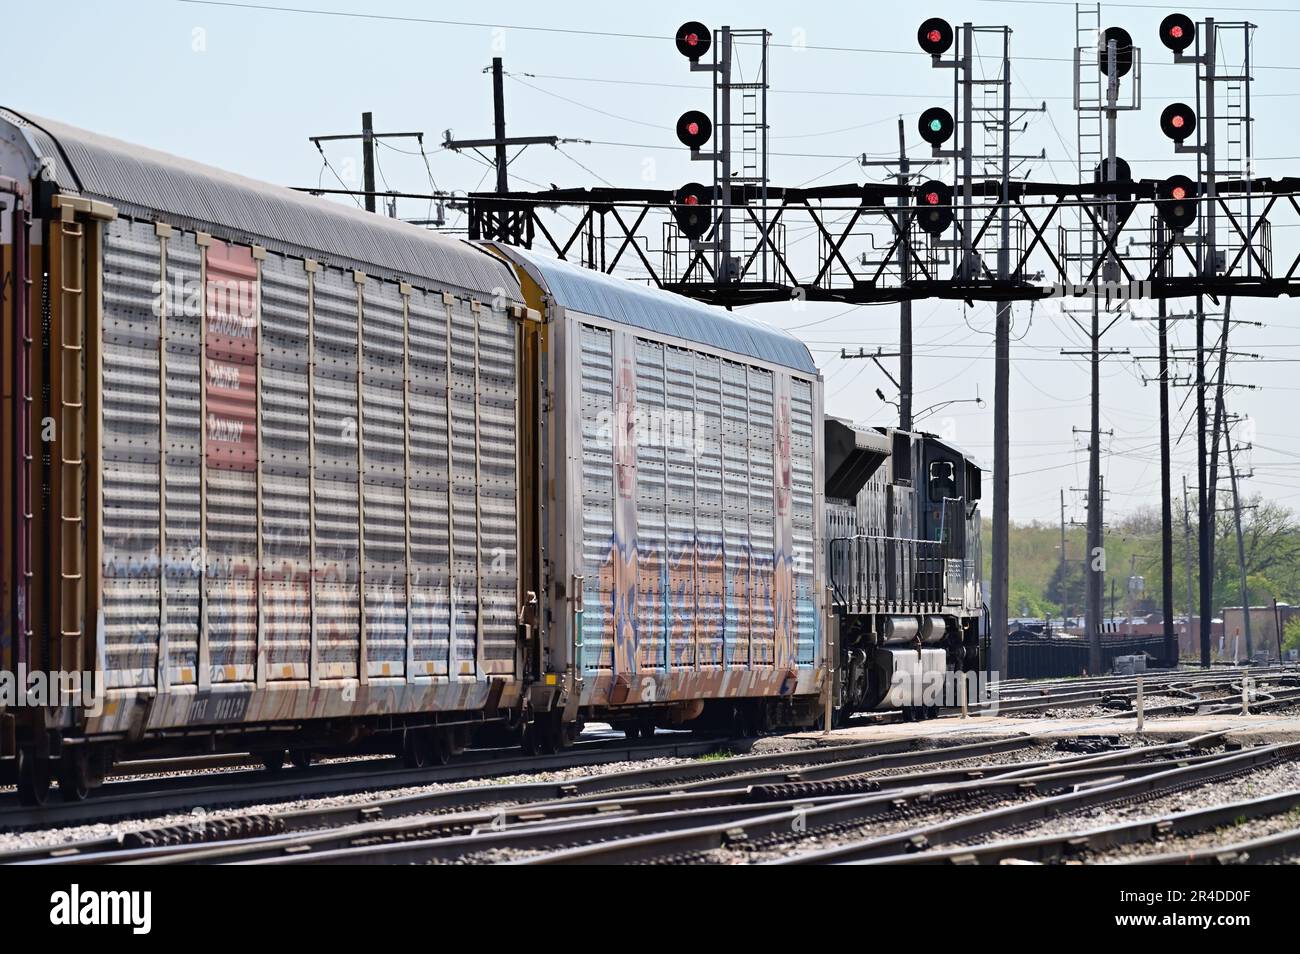 Franklin Park, Illinois, USA. A single locomotive leads a Canadian Pacific Kansas City (CPKC) freight train toward a signal bridge and a green signal. Stock Photo